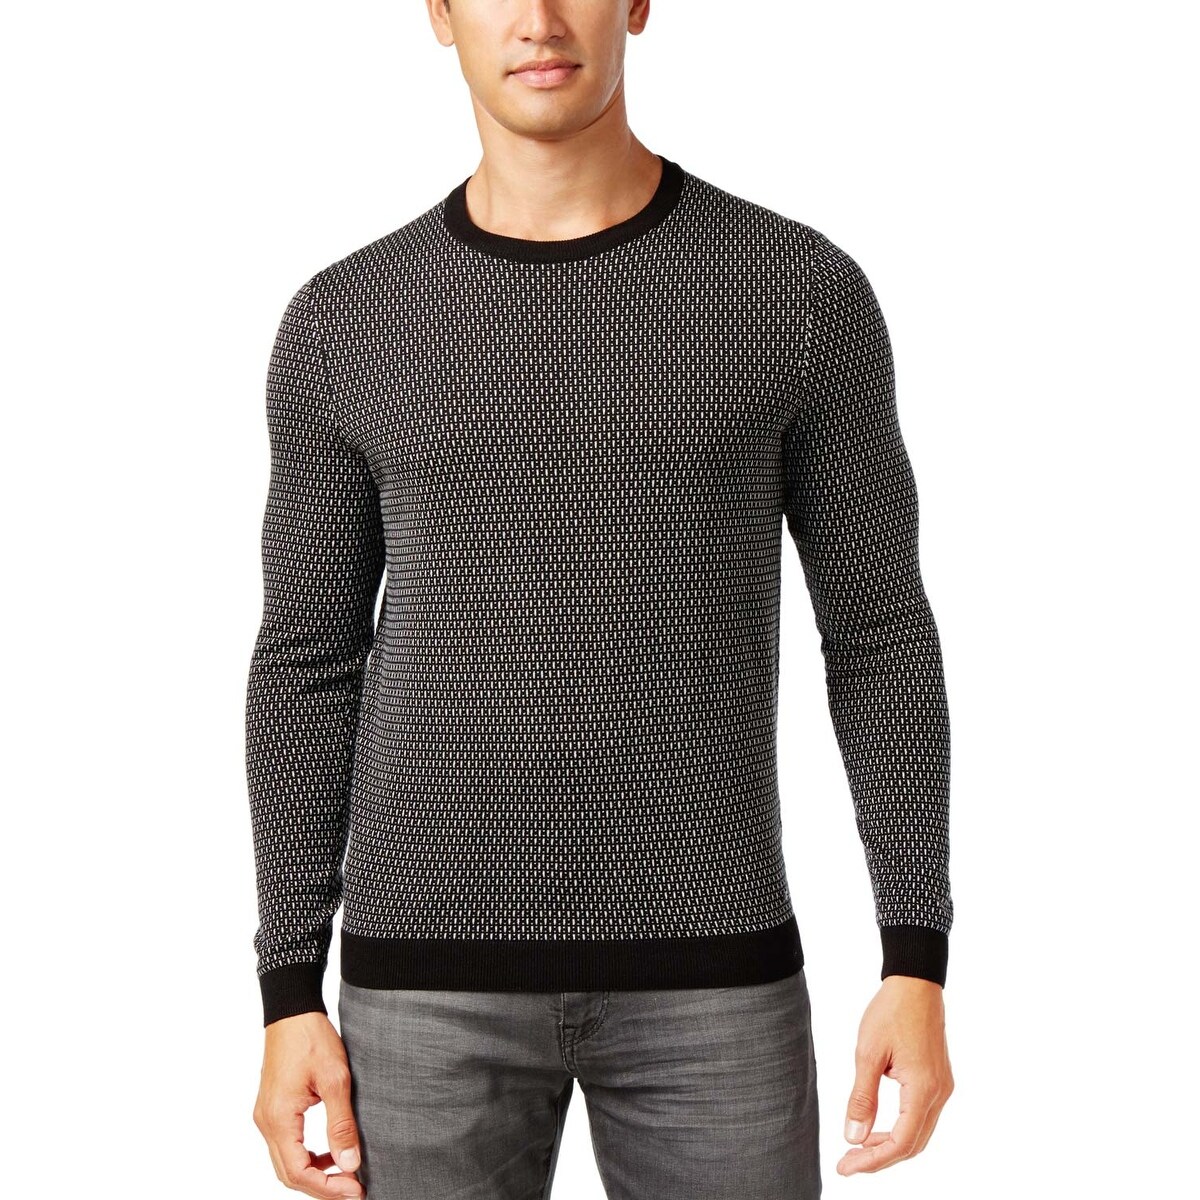 Hugo Boss Green Label Textured Geometric Crewneck Pullover Sweater Black - Overstock - 17415917